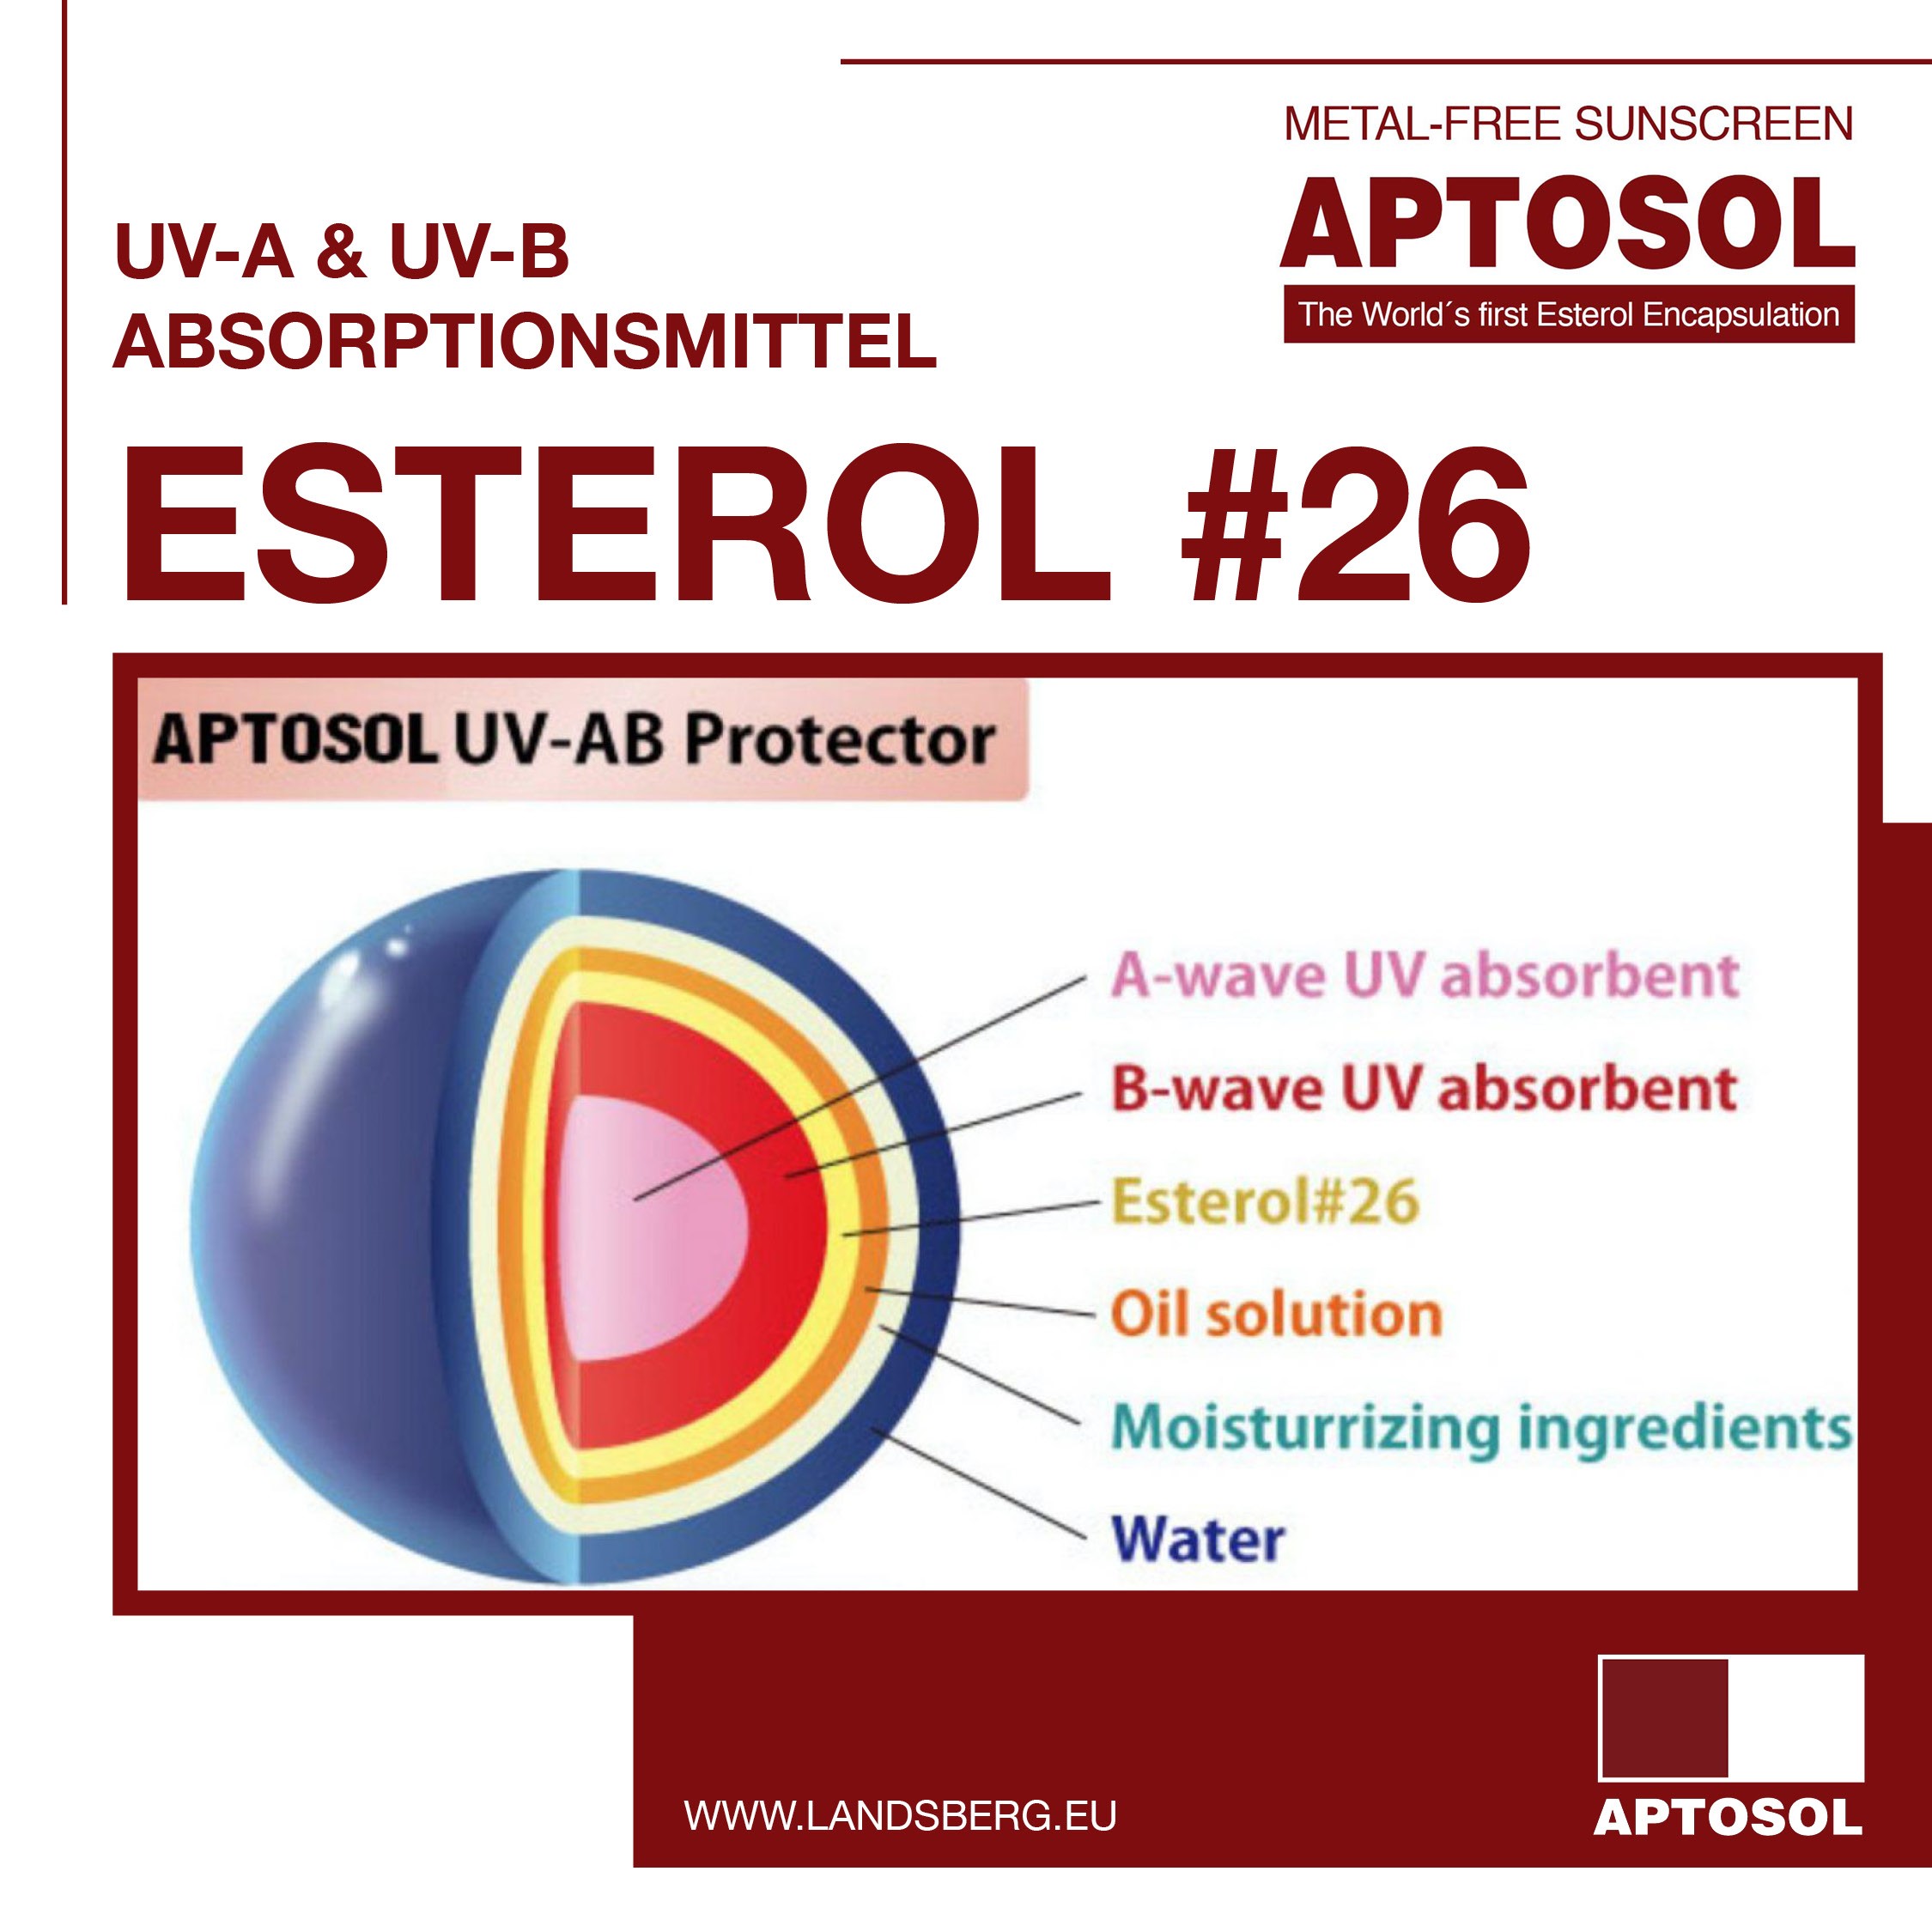 Aptosol UV Absorptionsmittel